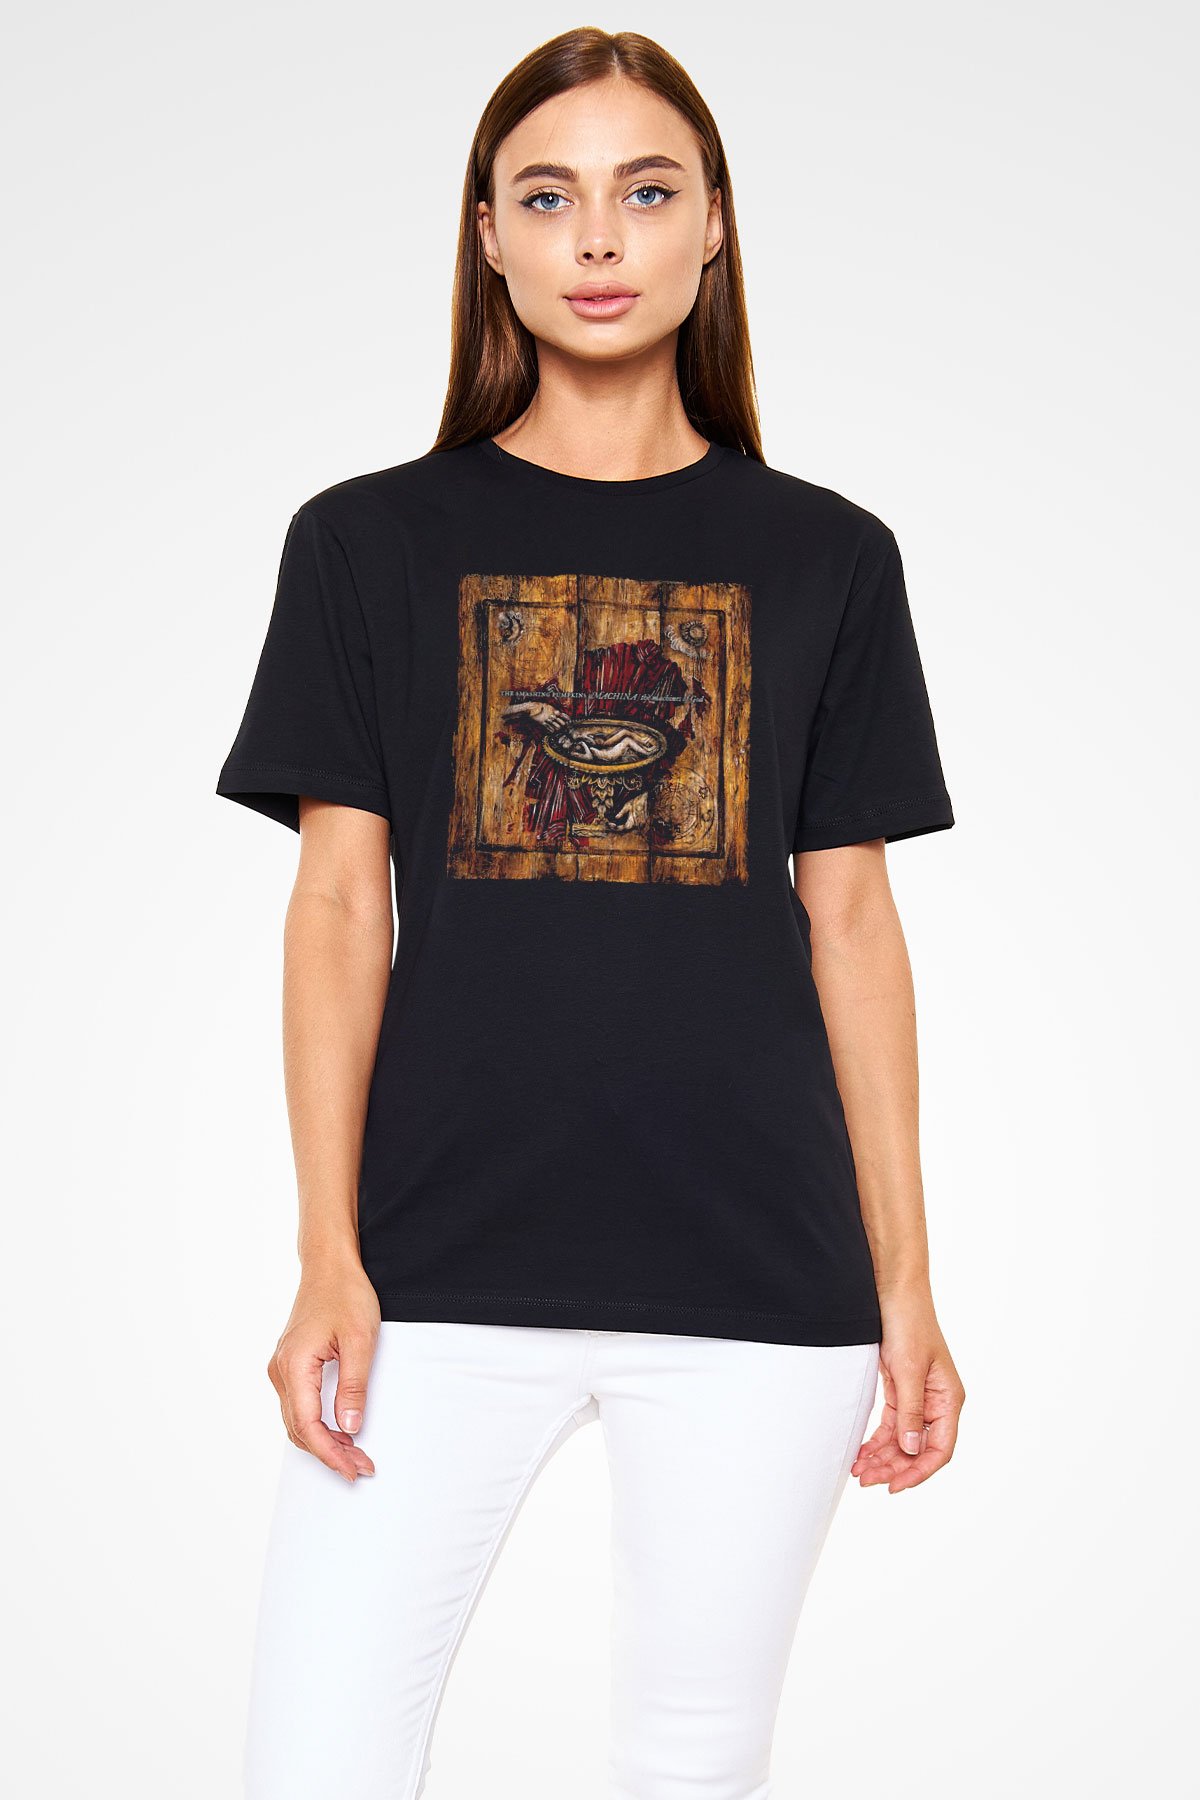 The Smashing Pumpkins Siyah Unisex Tişört - T-Shirt | Tişört Fabrikası